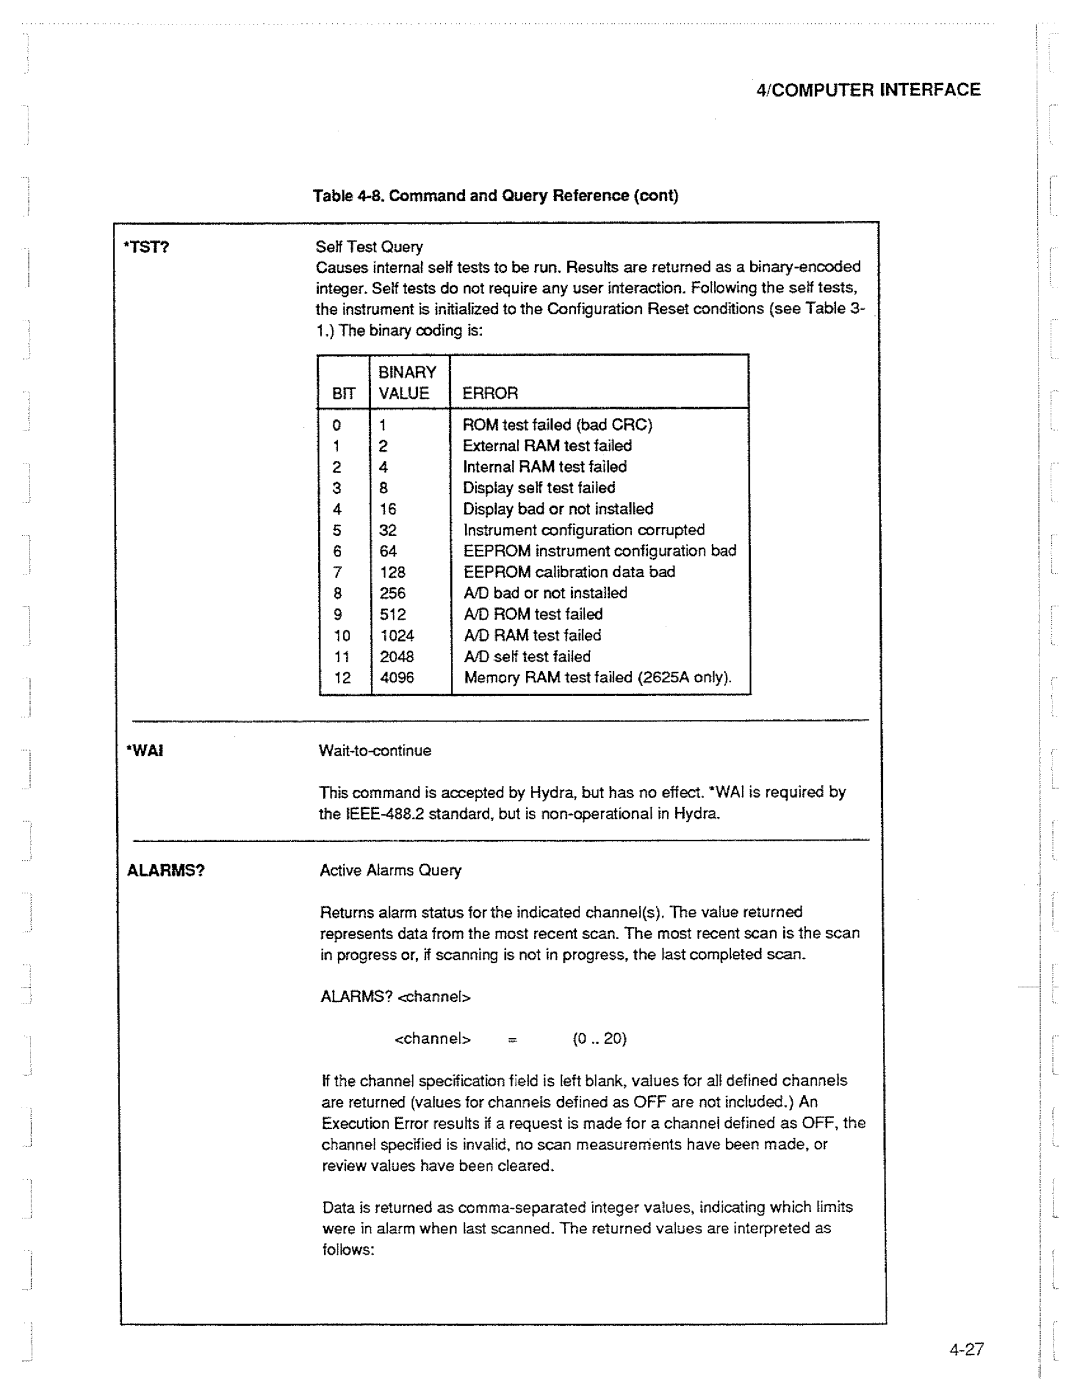 Fluke 2625A manual 